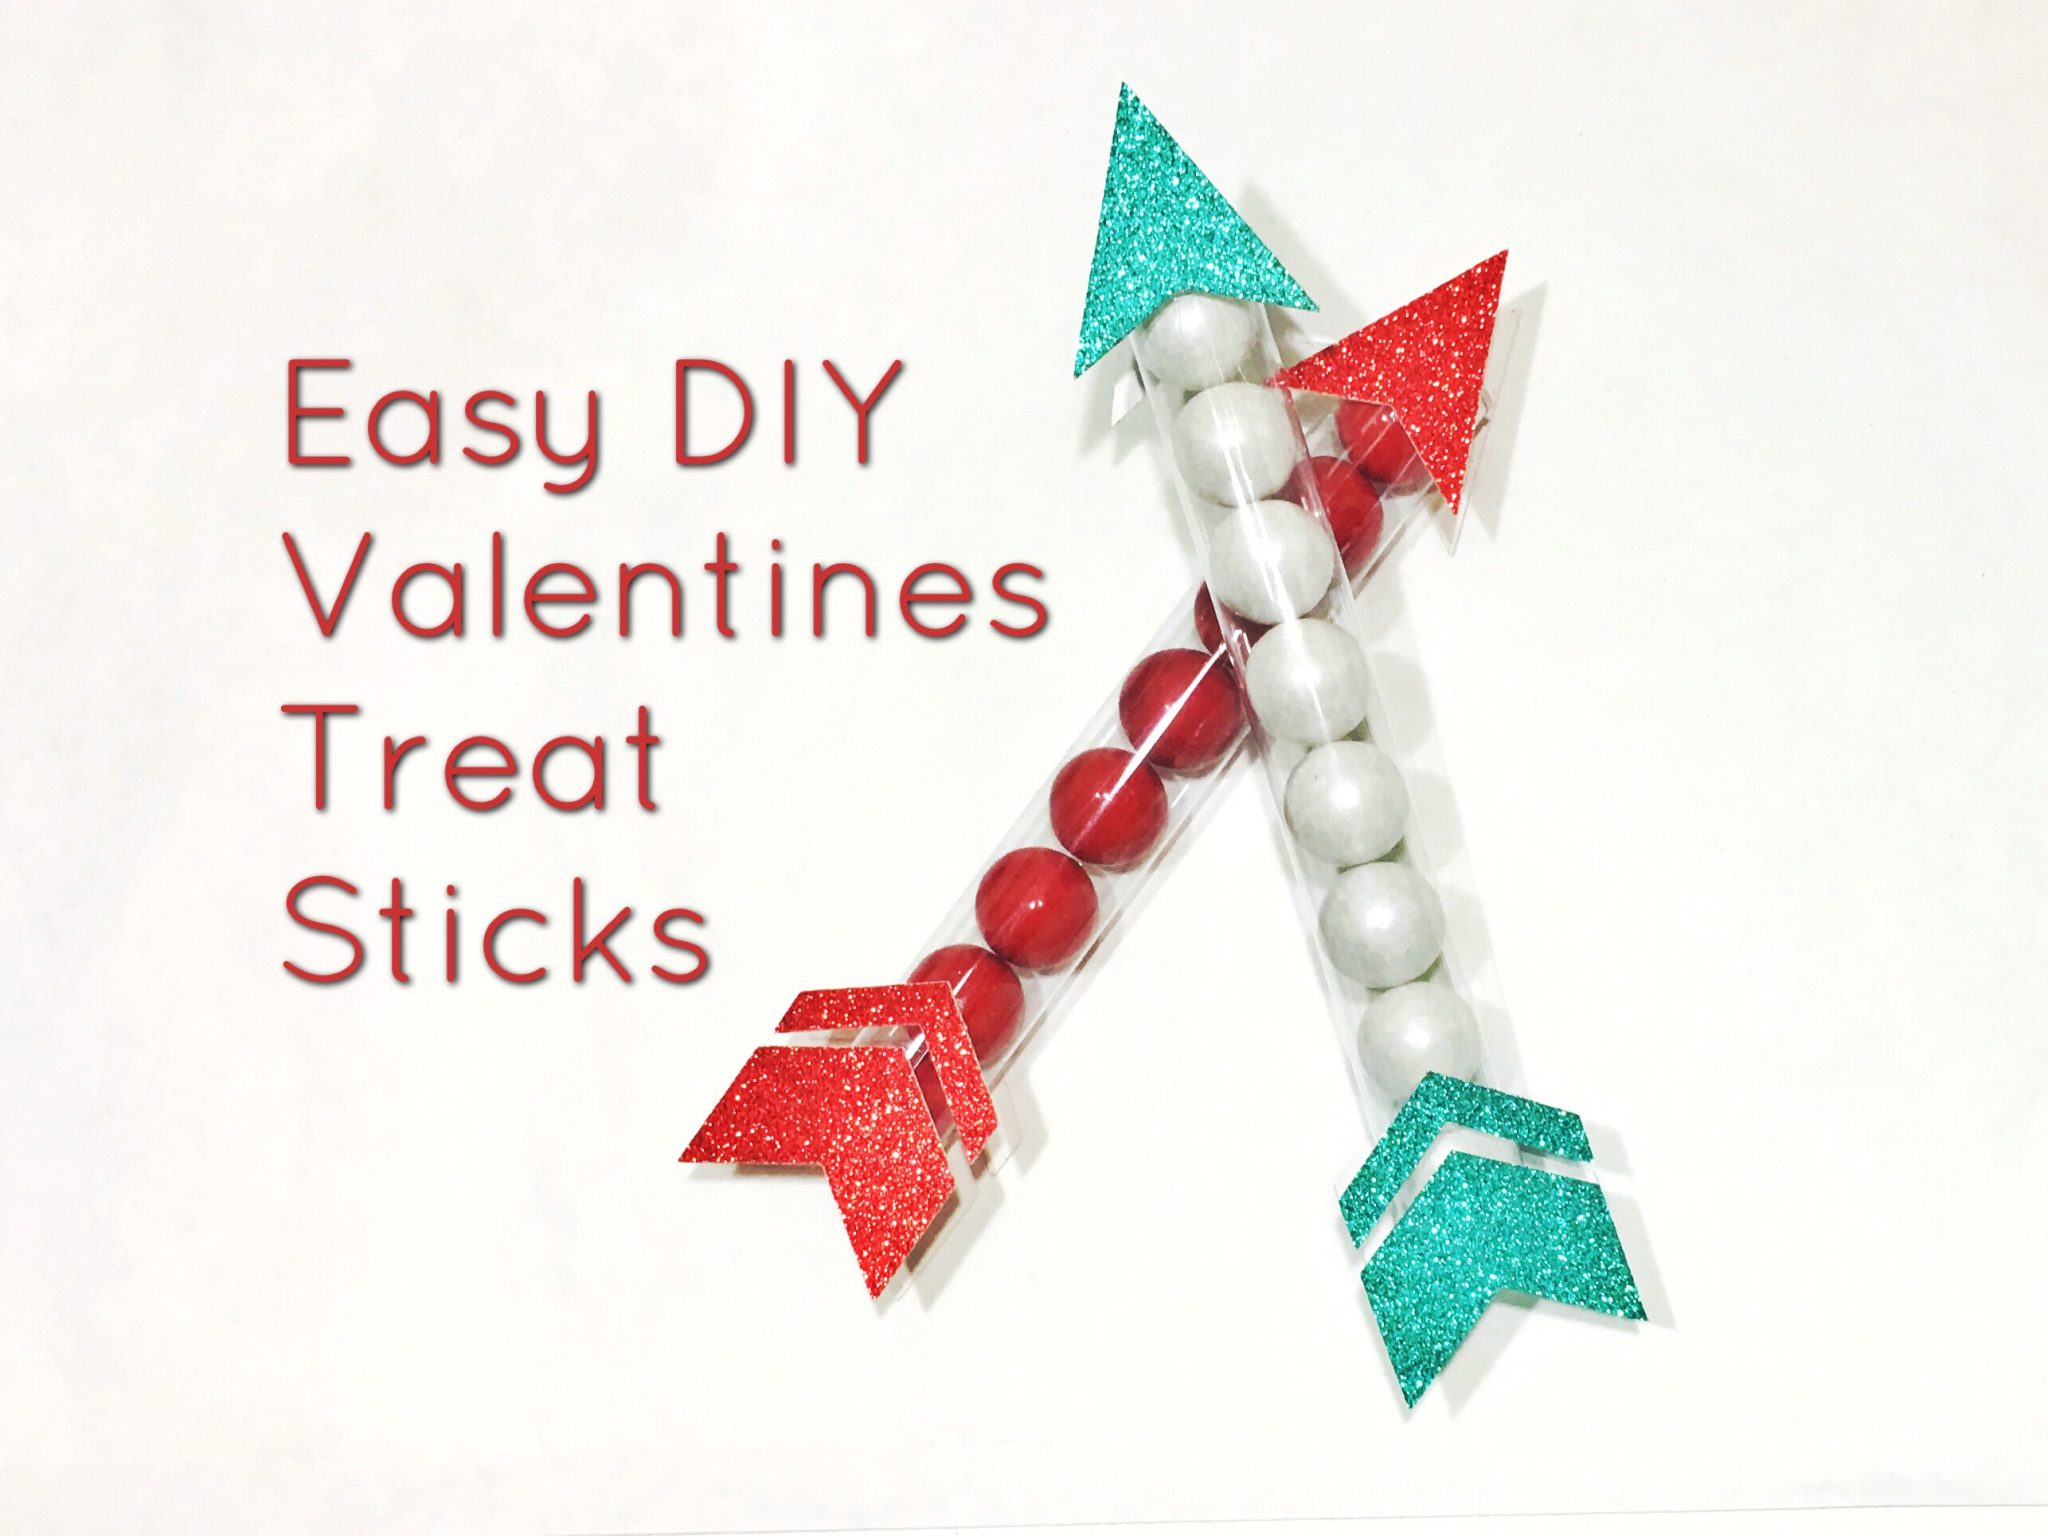 Easy DIY Valentines Treat Sticks